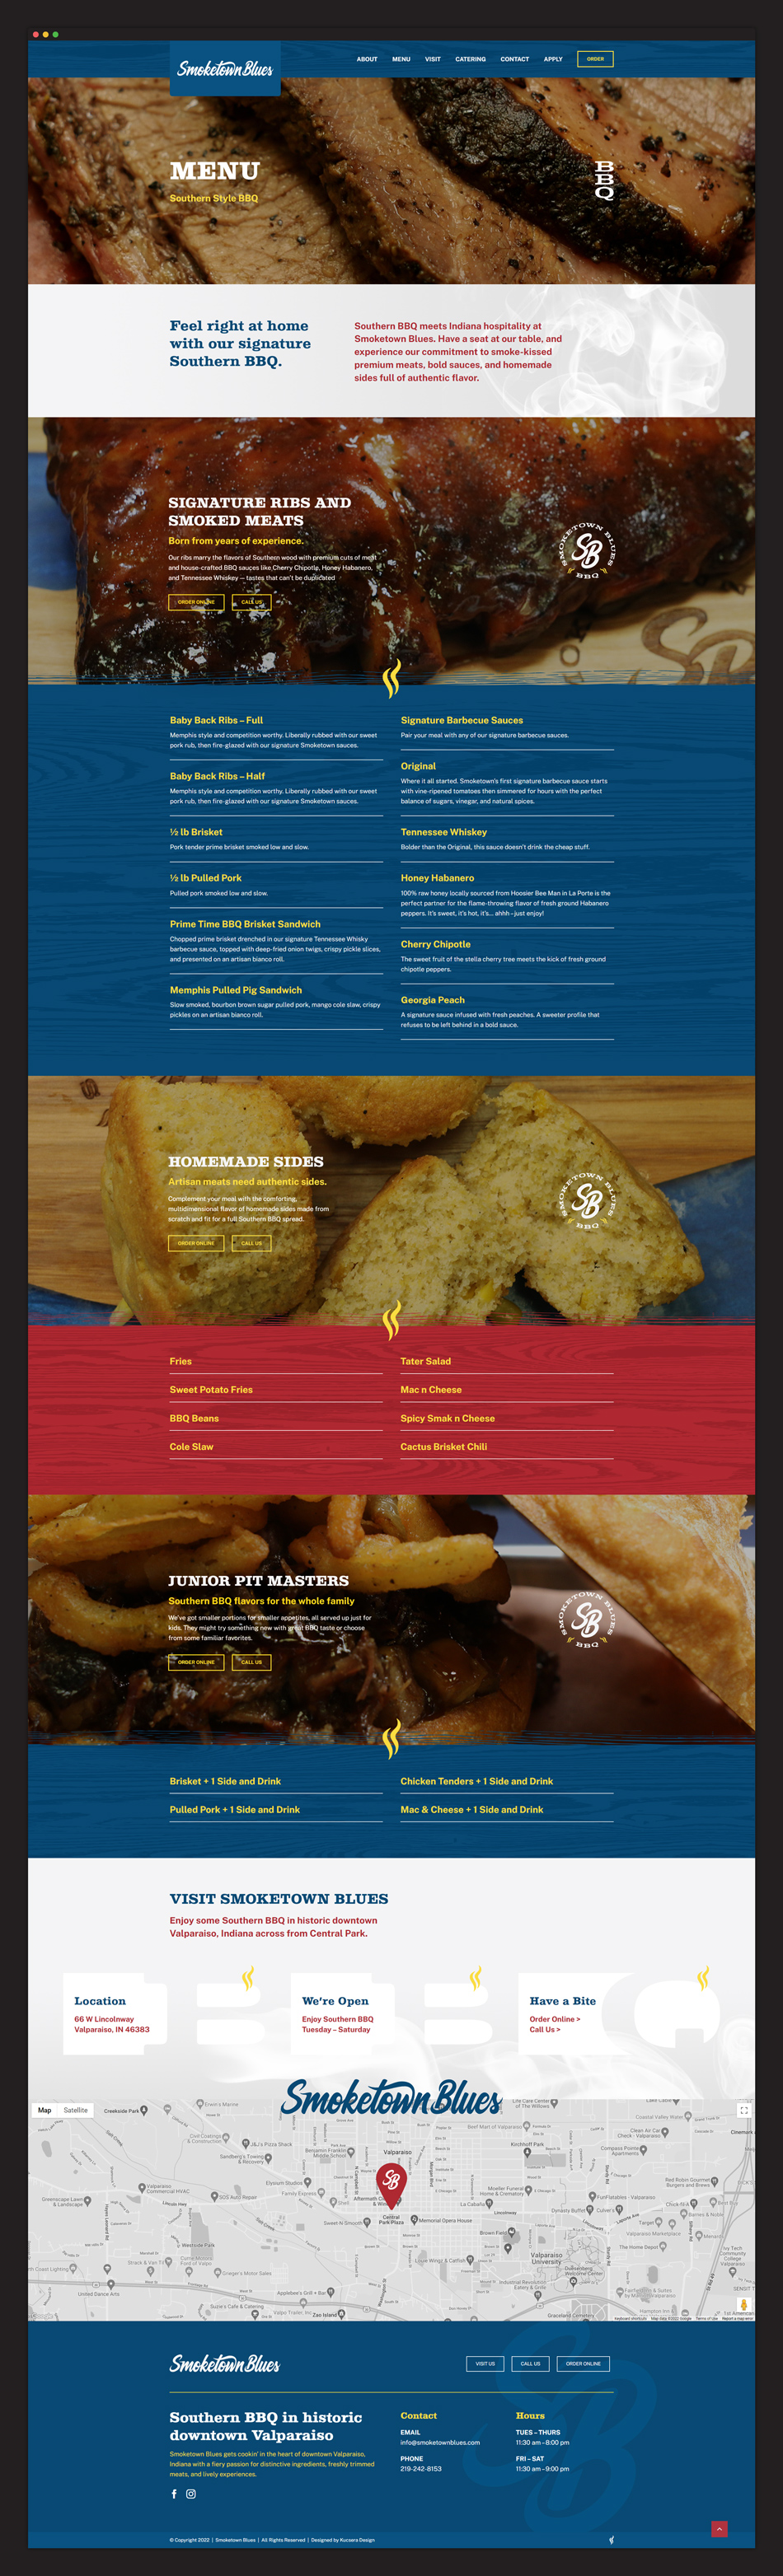 Smoketown Blues Barbecue menu page website design